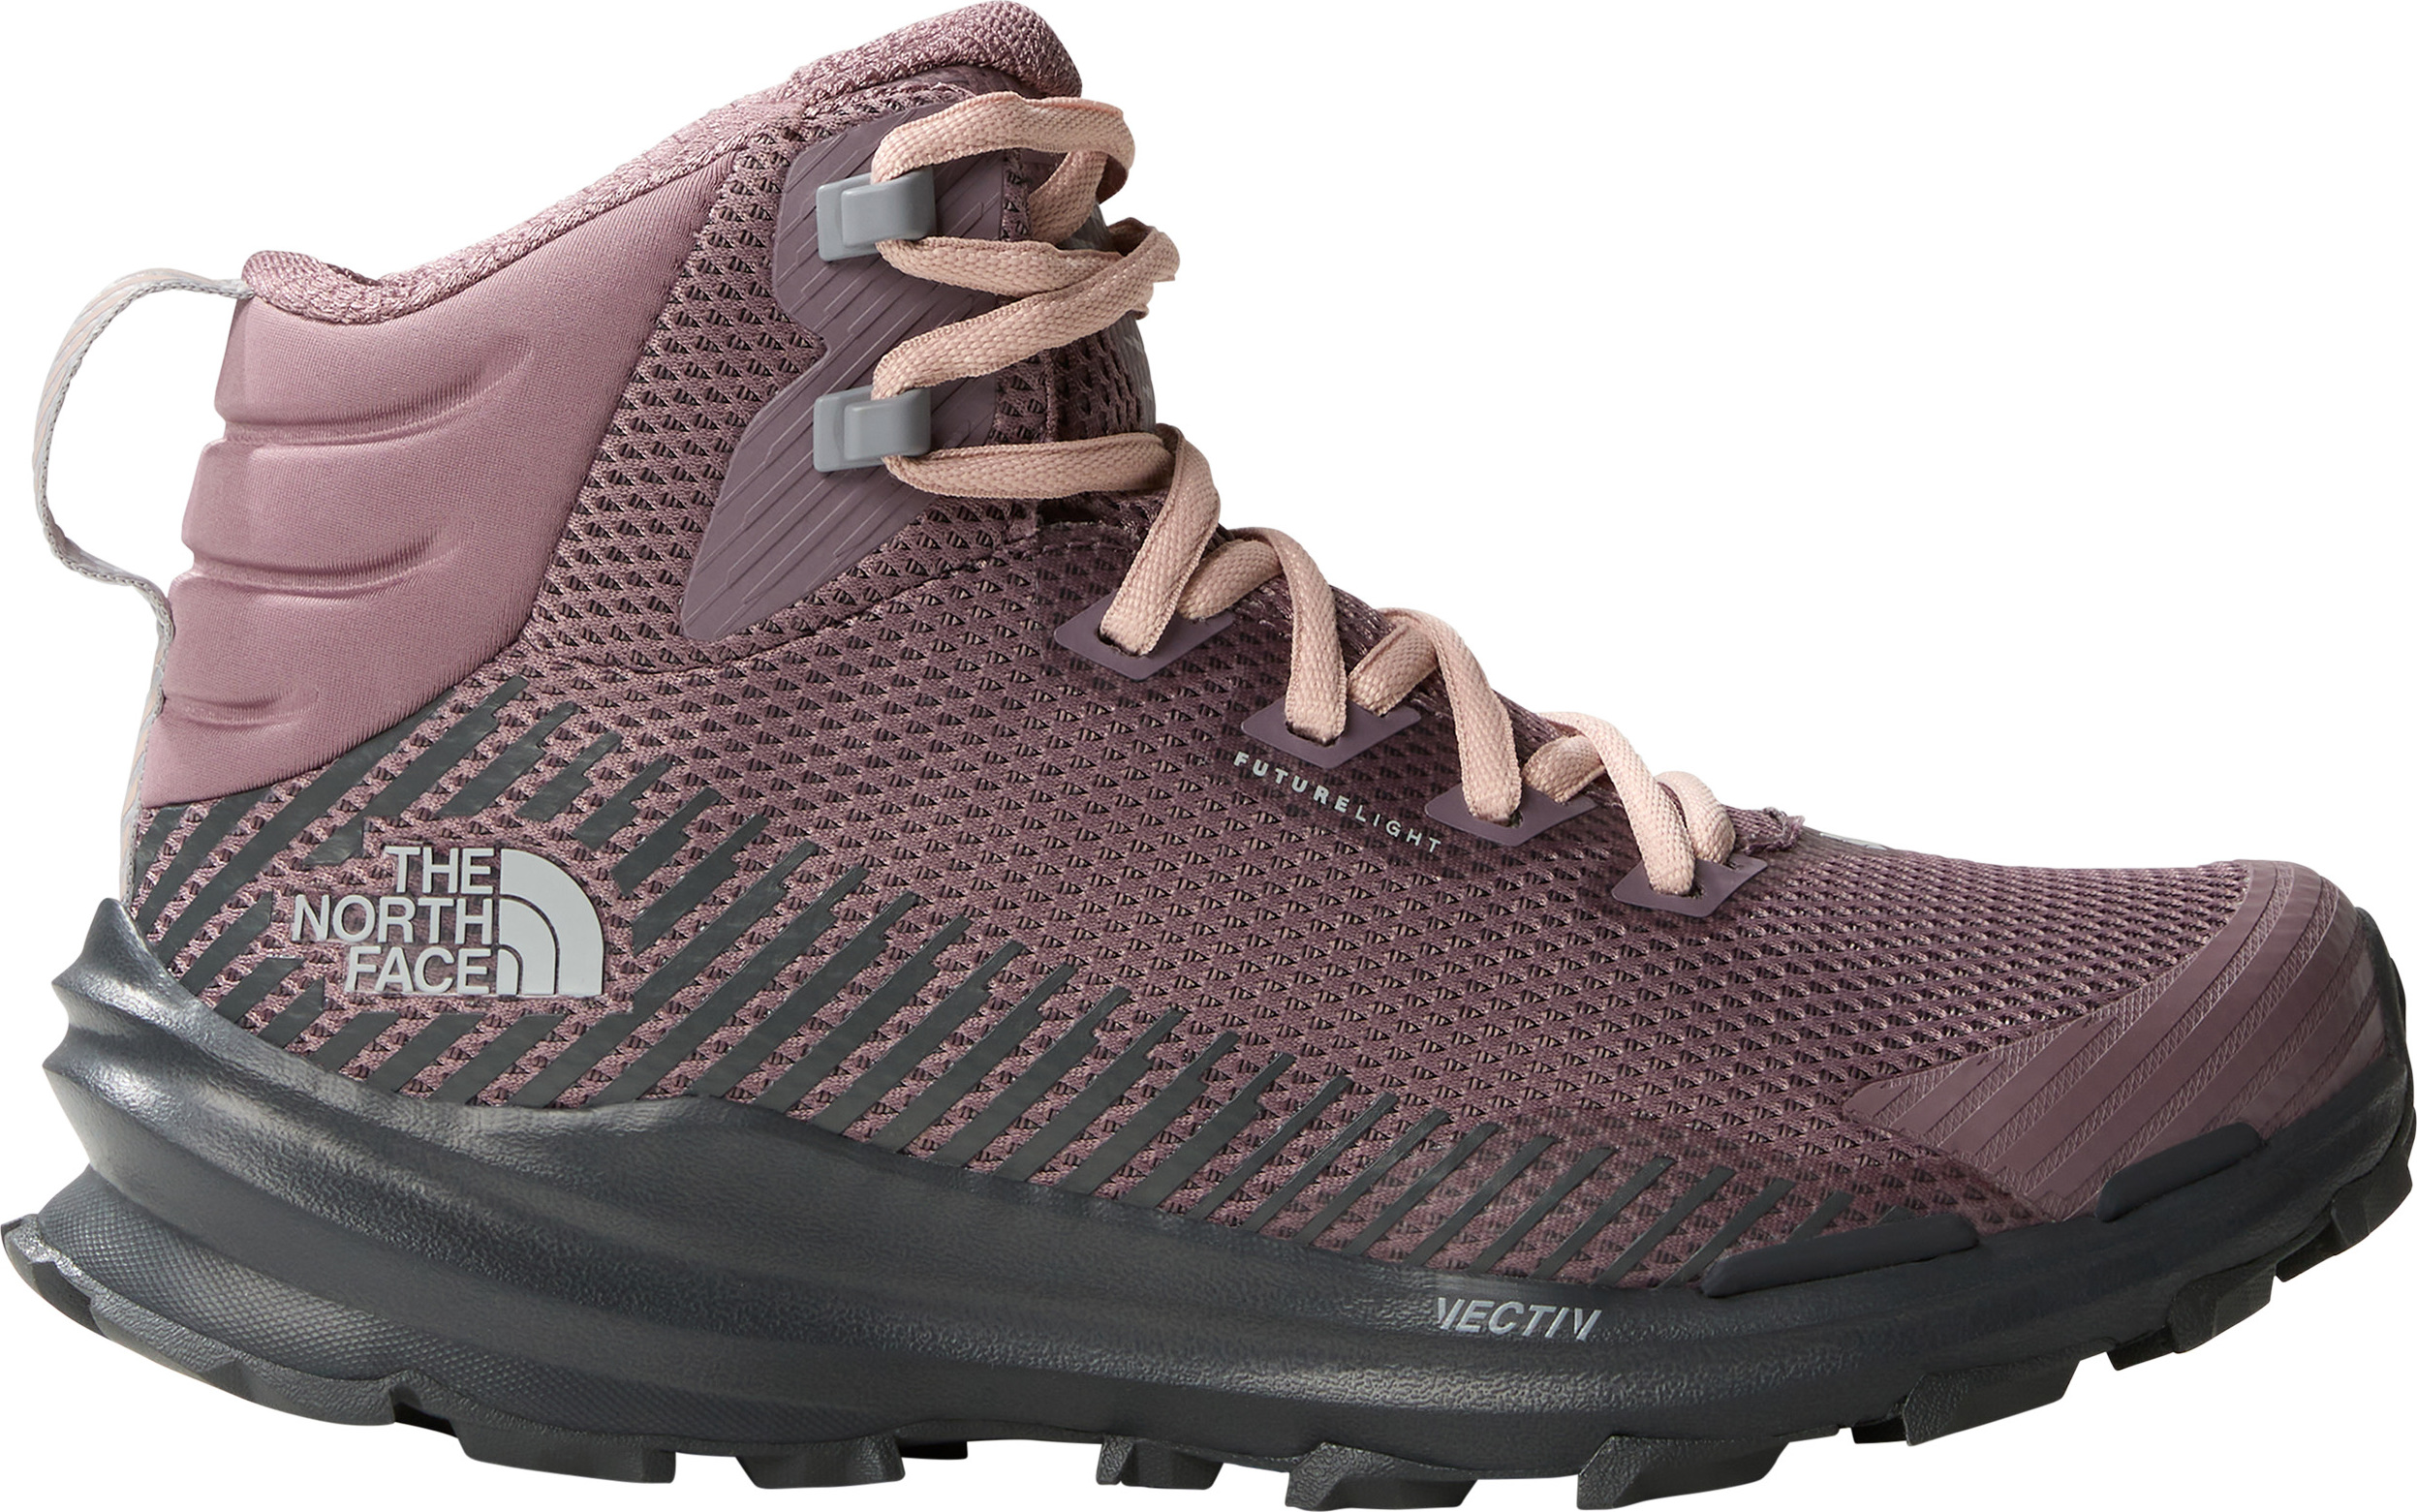 Women’s Vectiv Fastpack Futurelight Hiking Boots Fawn Grey/Asphalt Grey